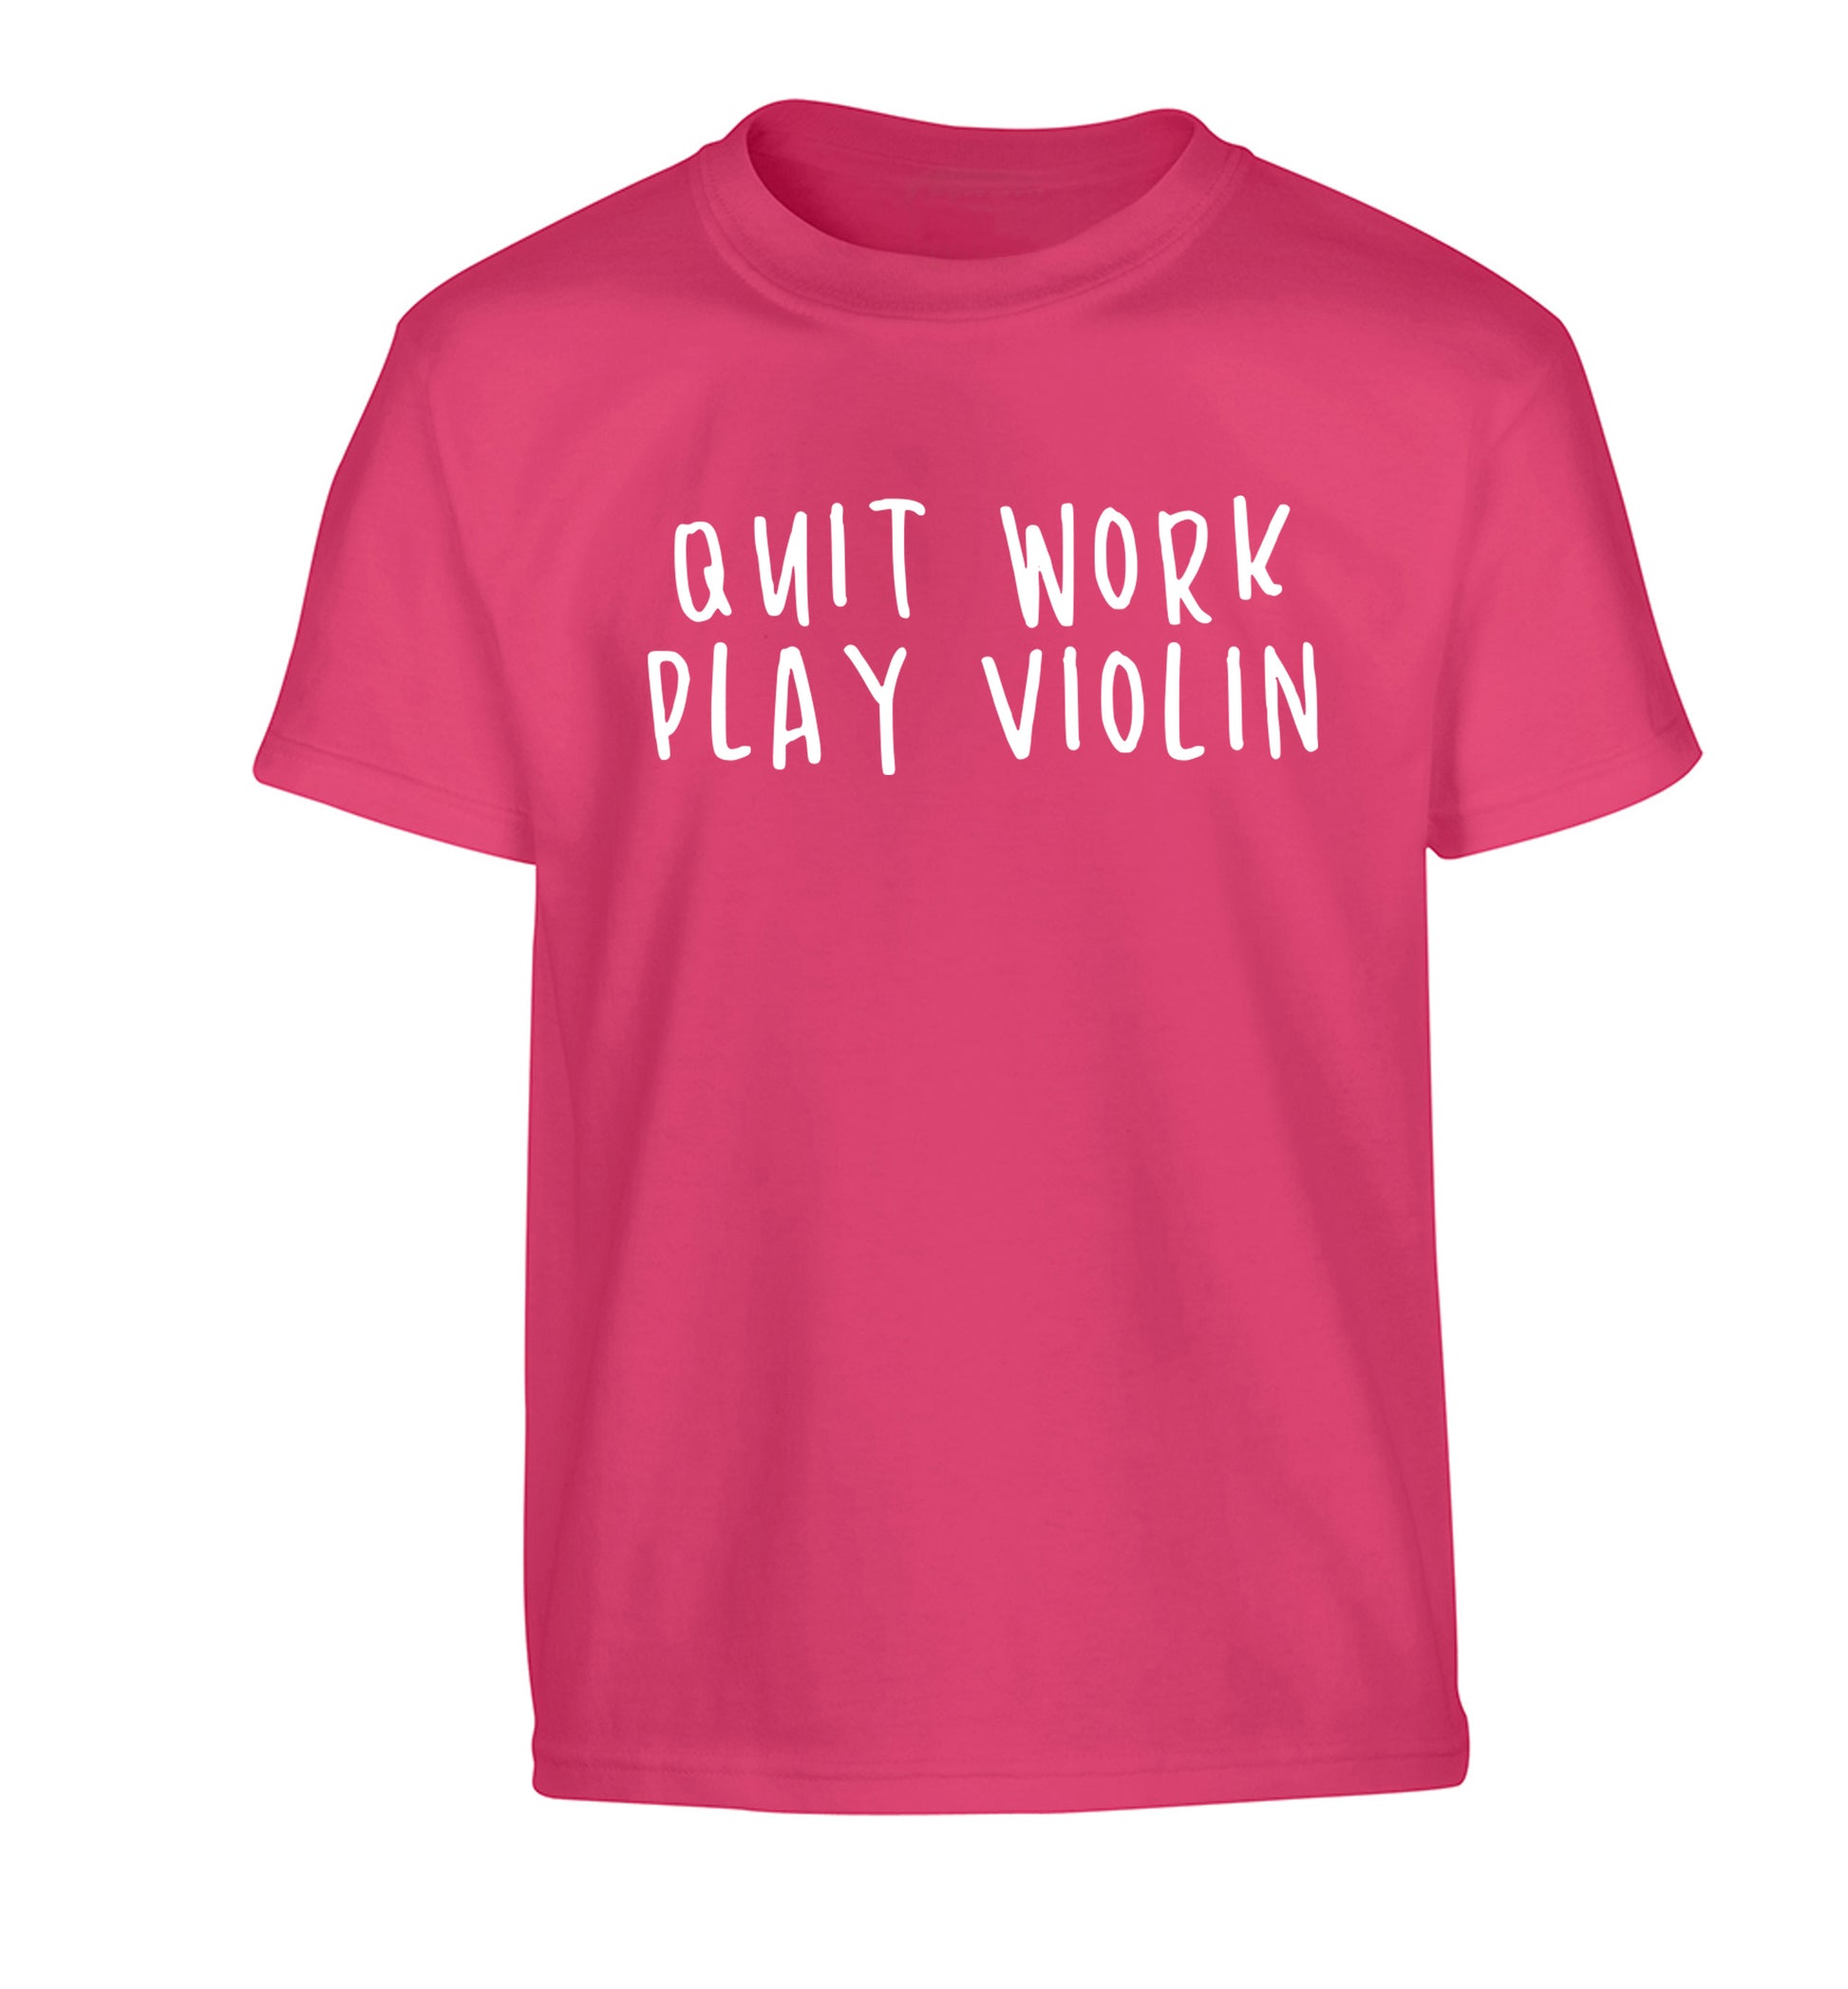 Quit work play violin Children's pink Tshirt 12-13 Years